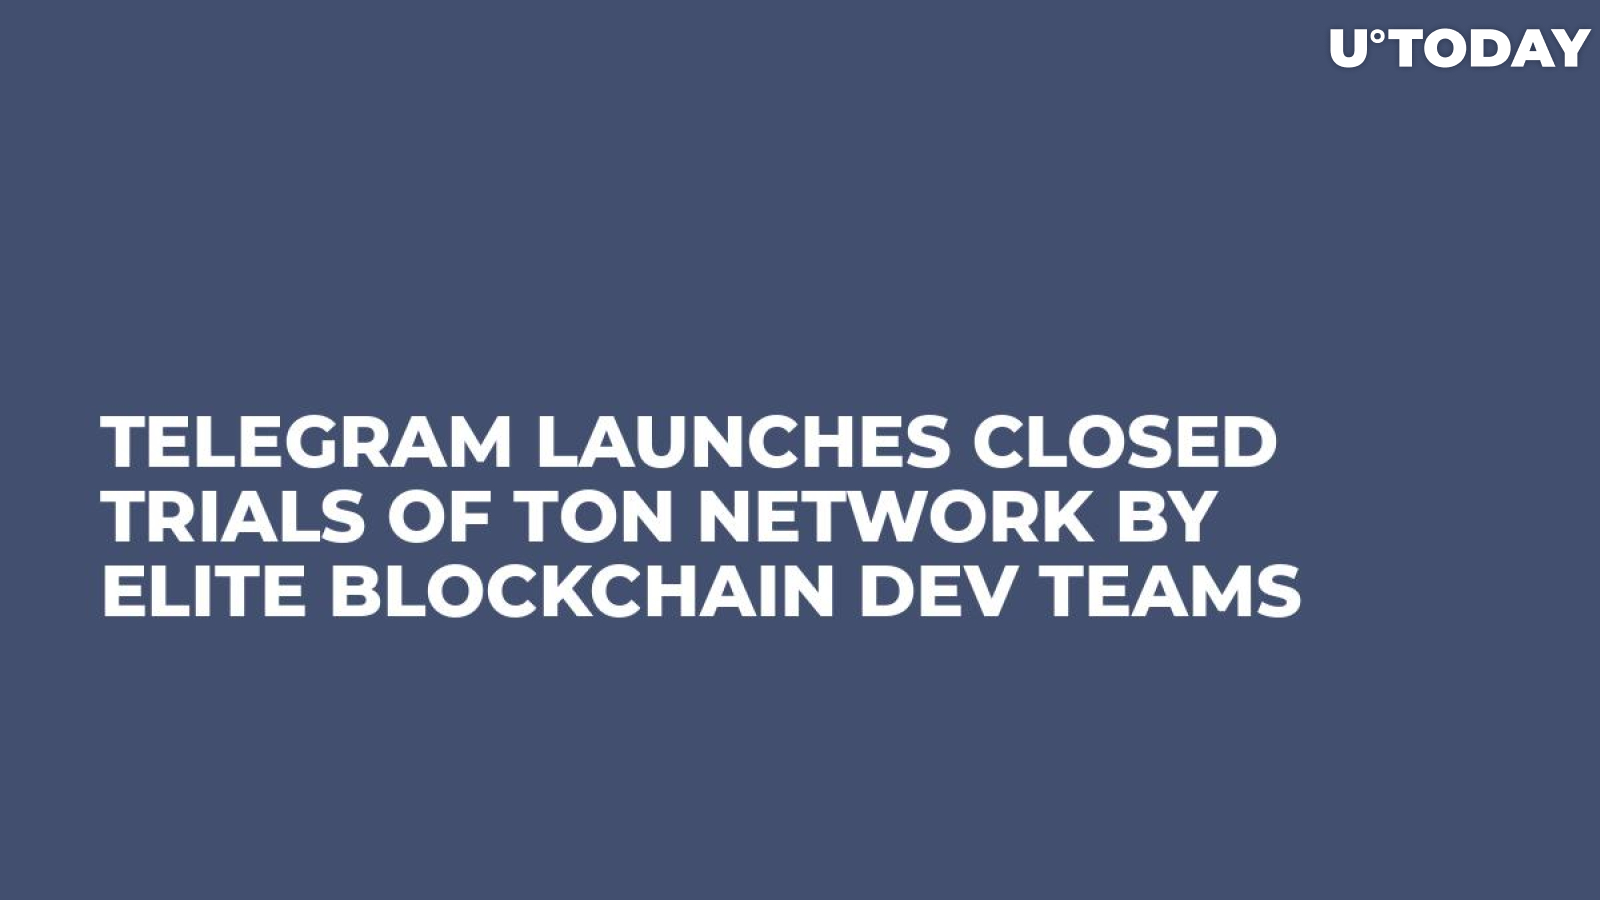 Telegram Launches Closed Trials of TON Network by Elite Blockchain Dev Teams